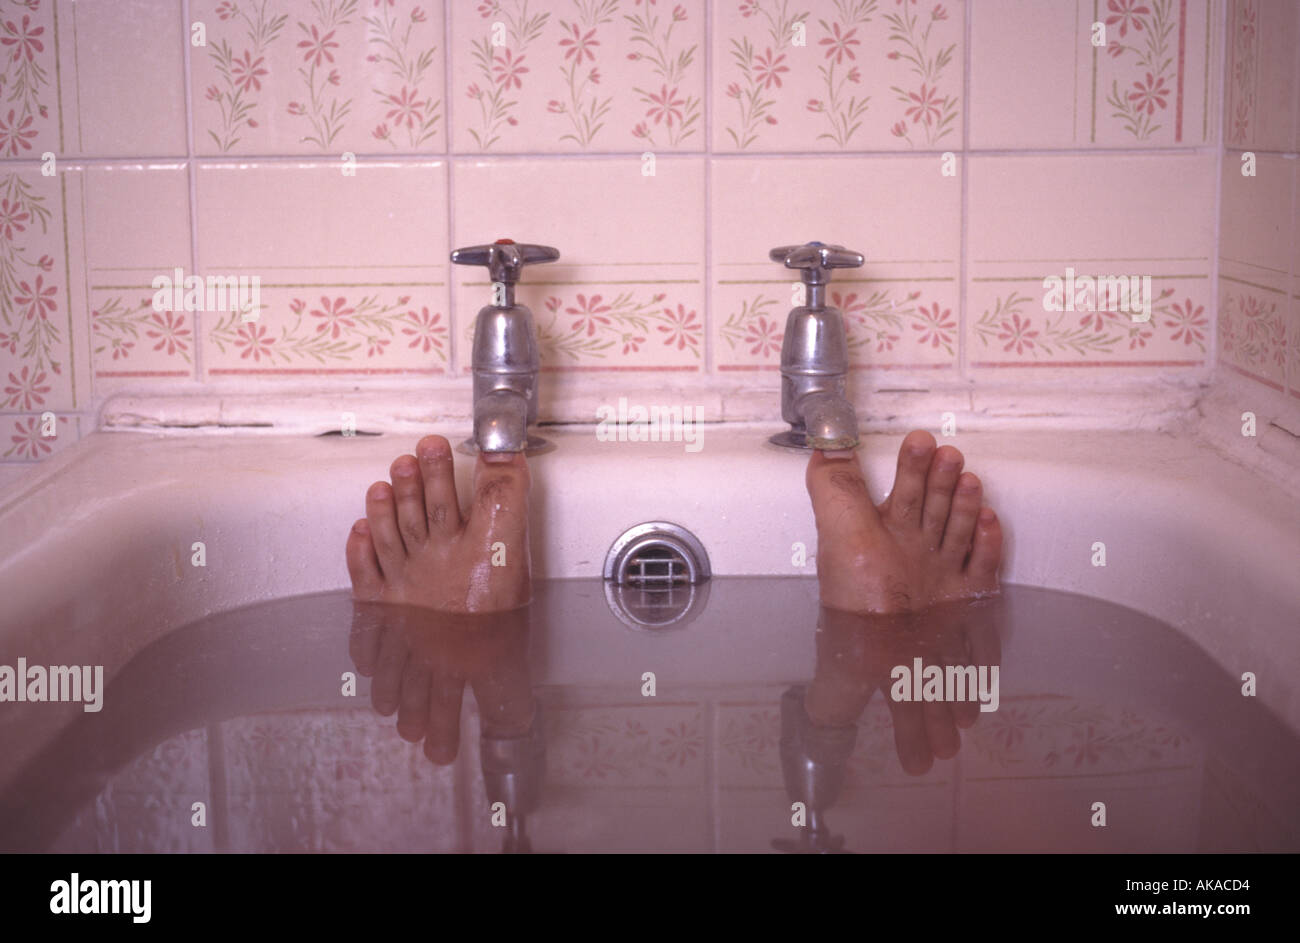 Toes Plug Taps in Bath Stock Photo